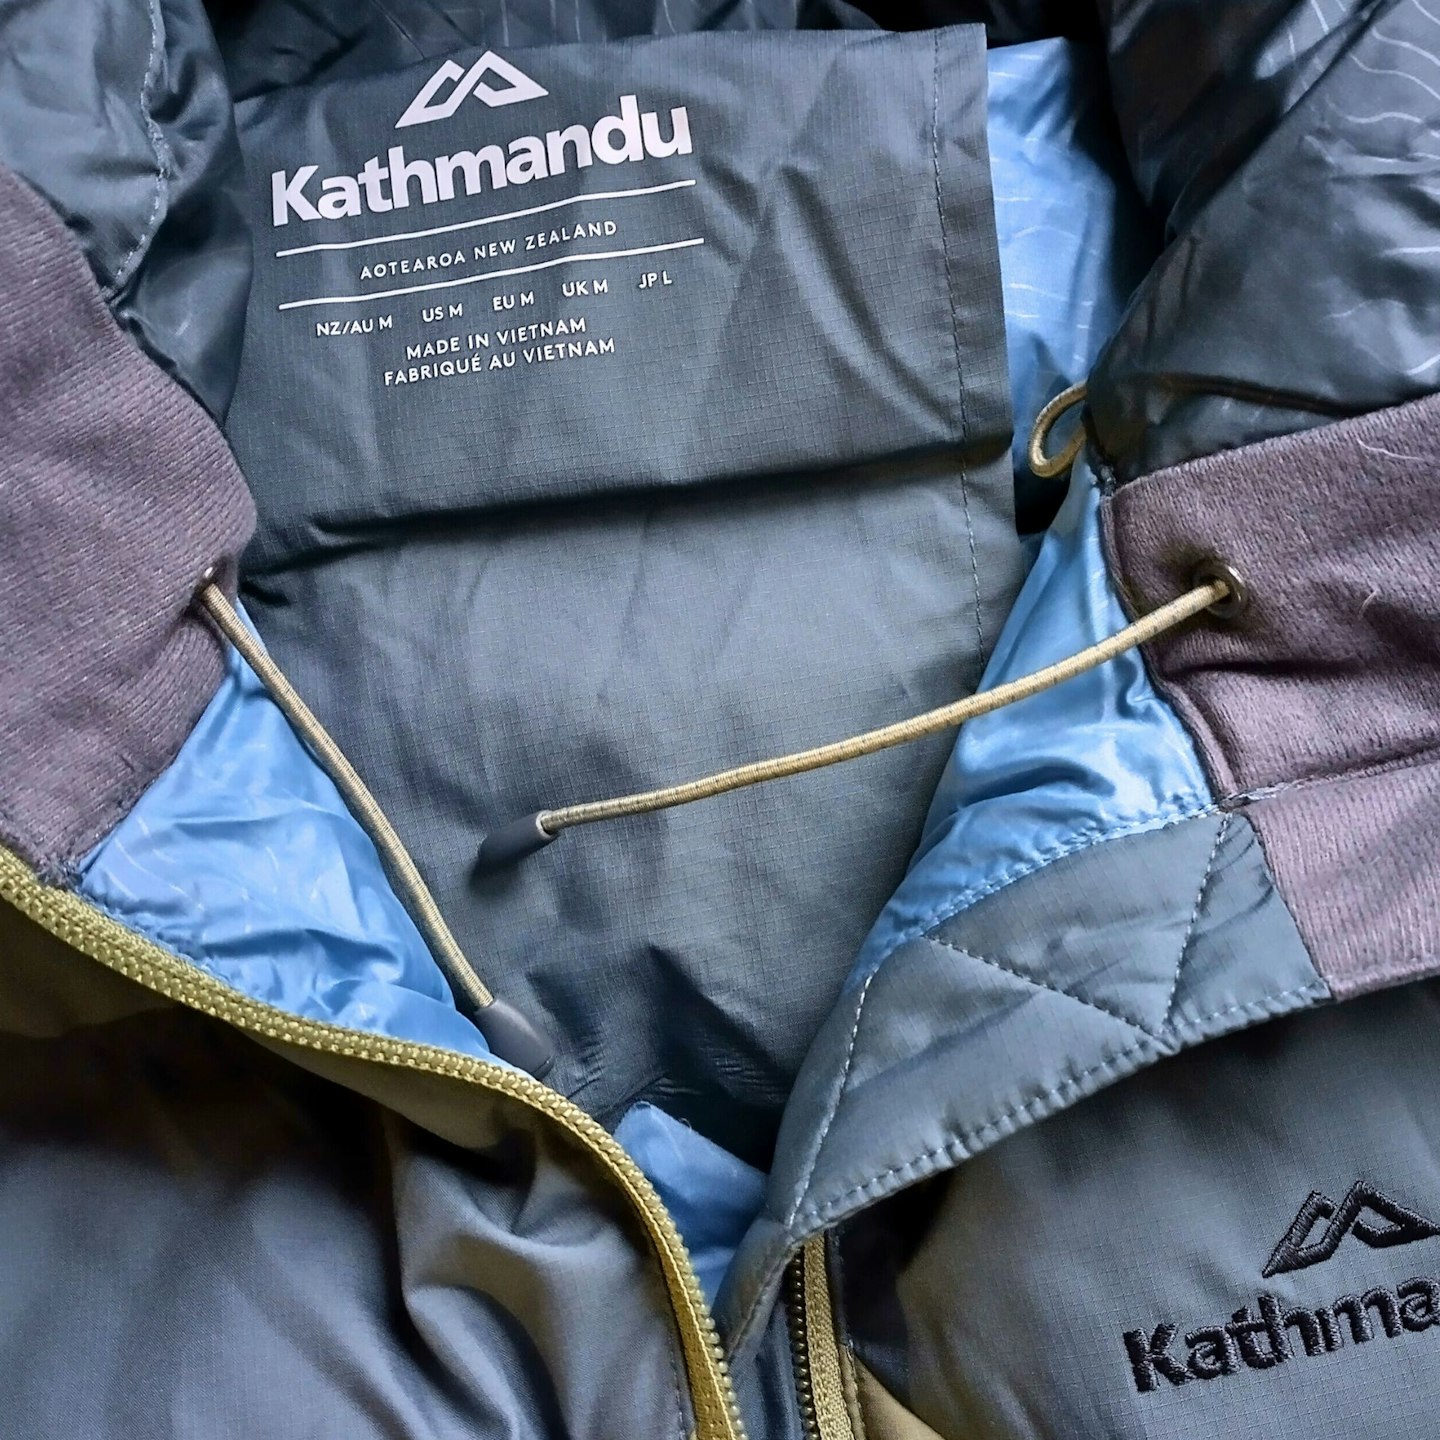 Kathmandu Epiq Hooded Down Jacket hood adjustment toggles